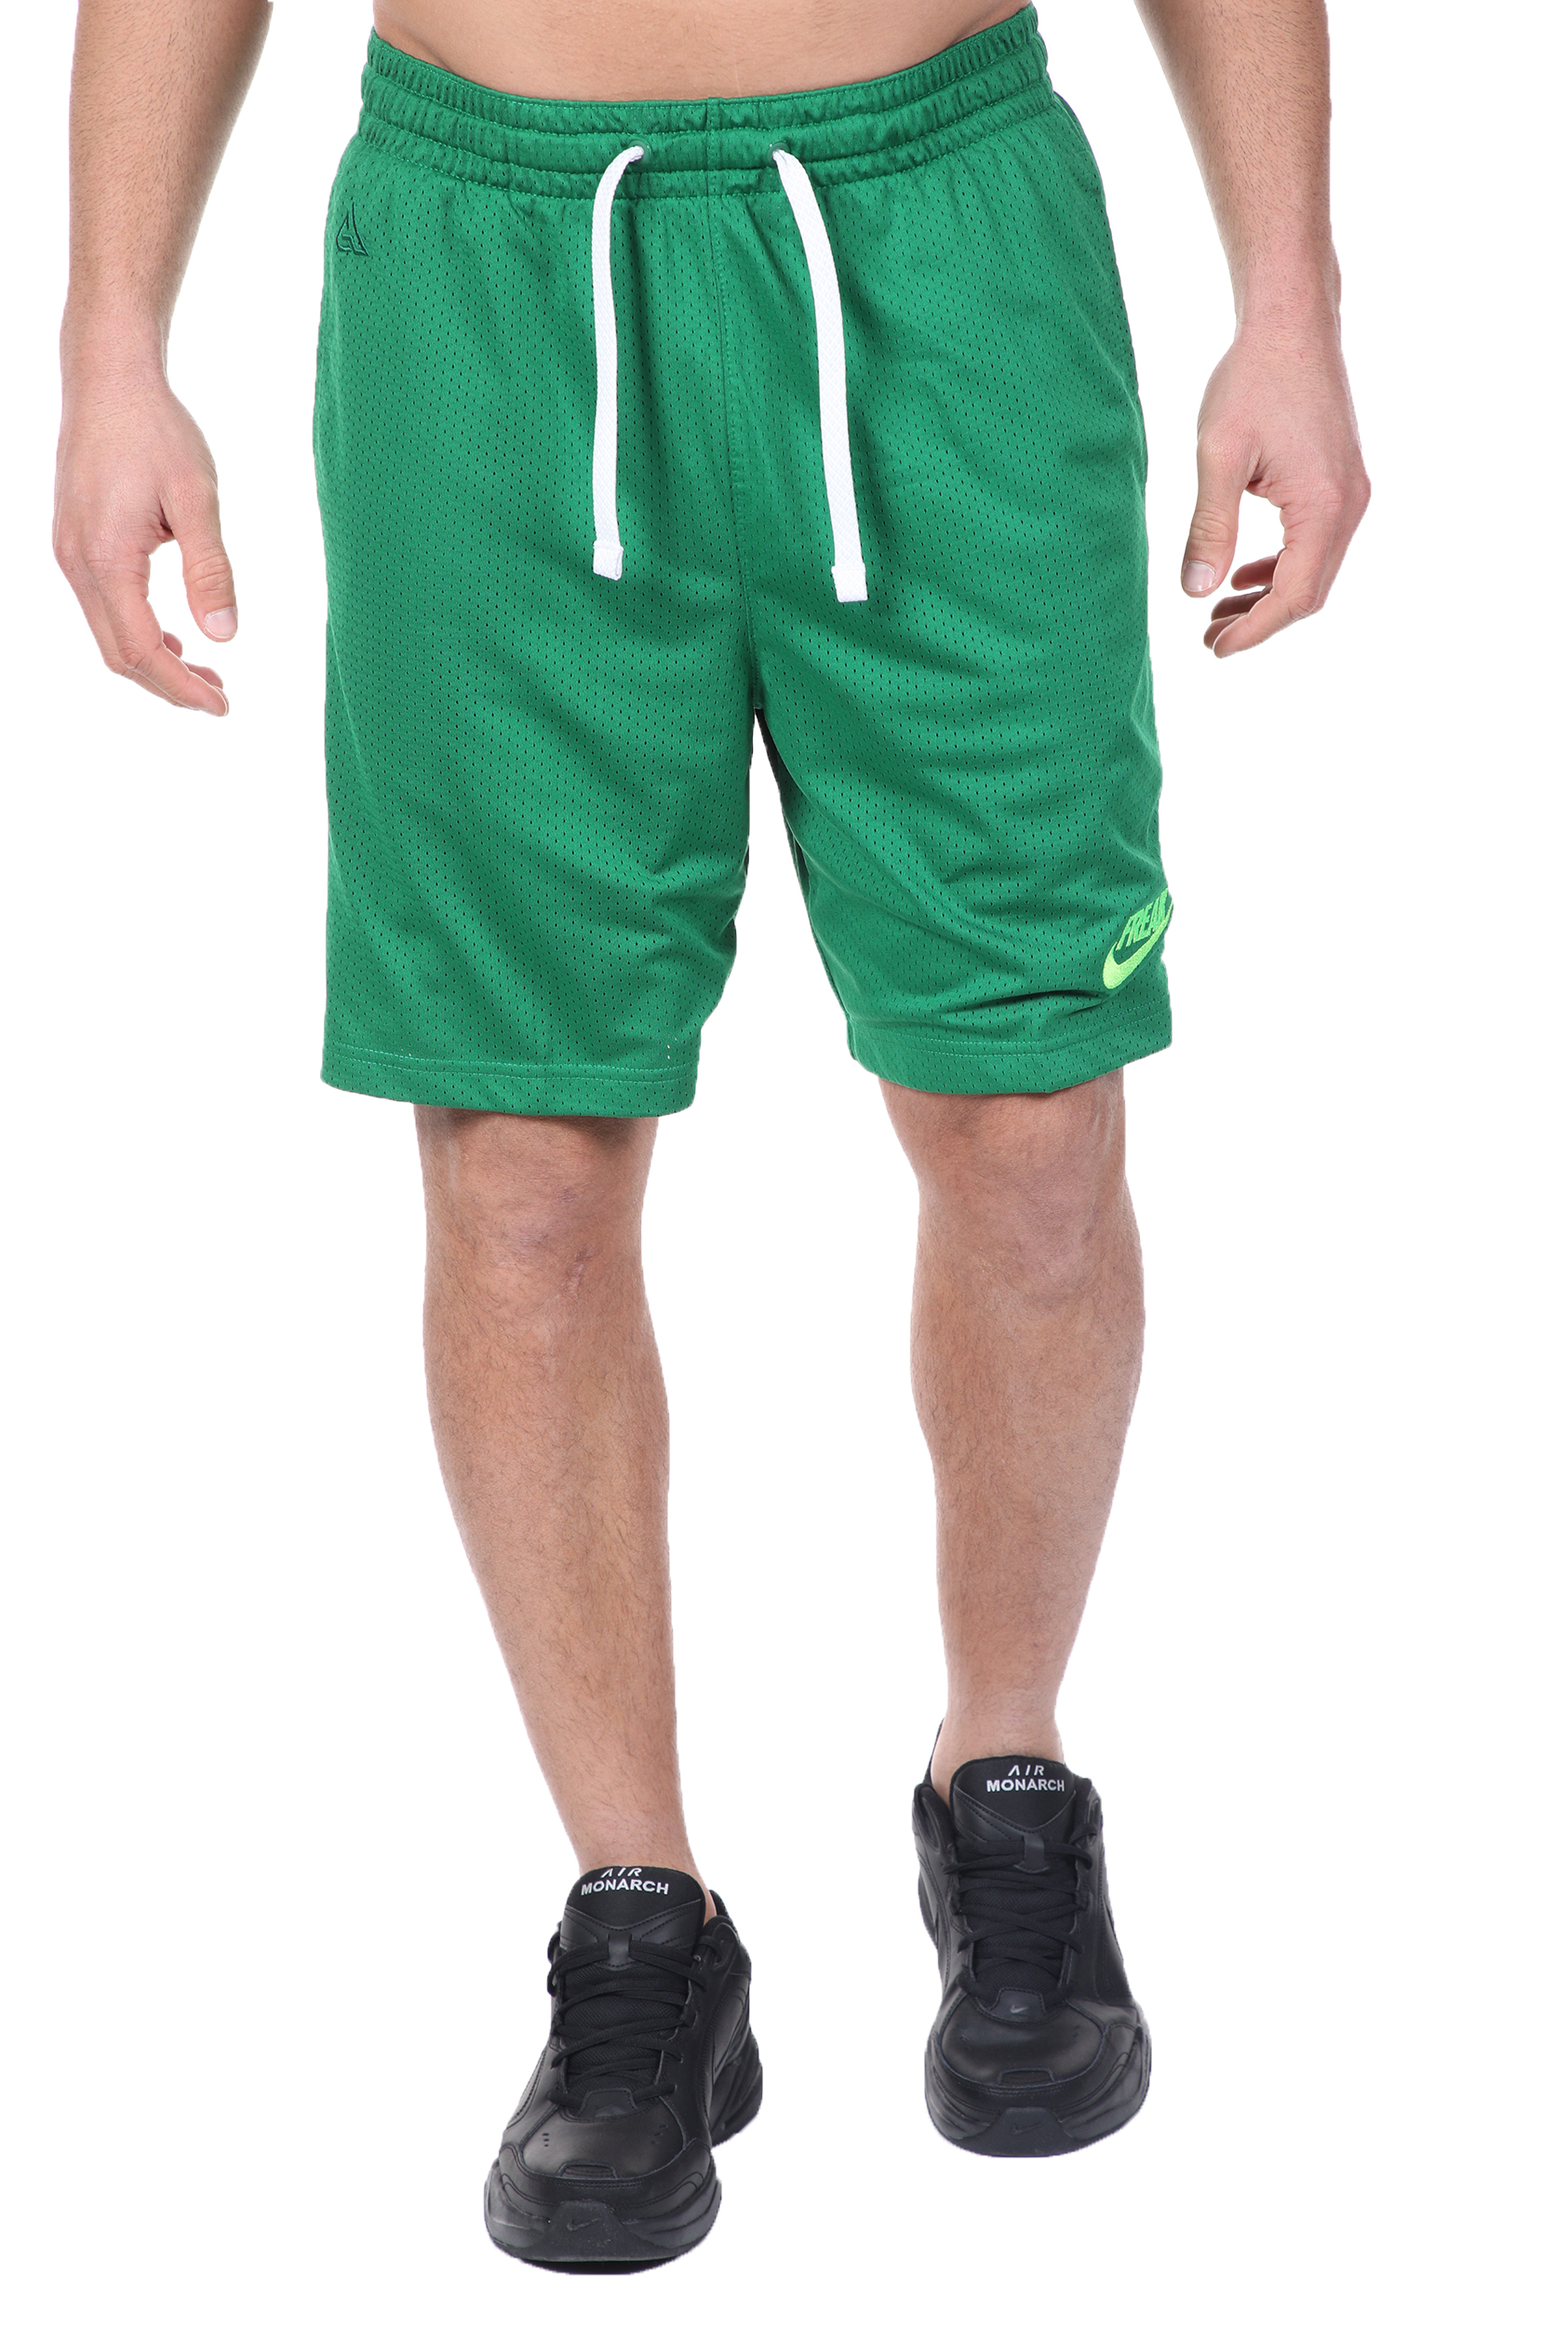 NIKE - Ανδρική βερμούδα basketball NIKE FREAK GIANNIS πράσινη Ανδρικά/Ρούχα/Σορτς-Βερμούδες/Αθλητικά